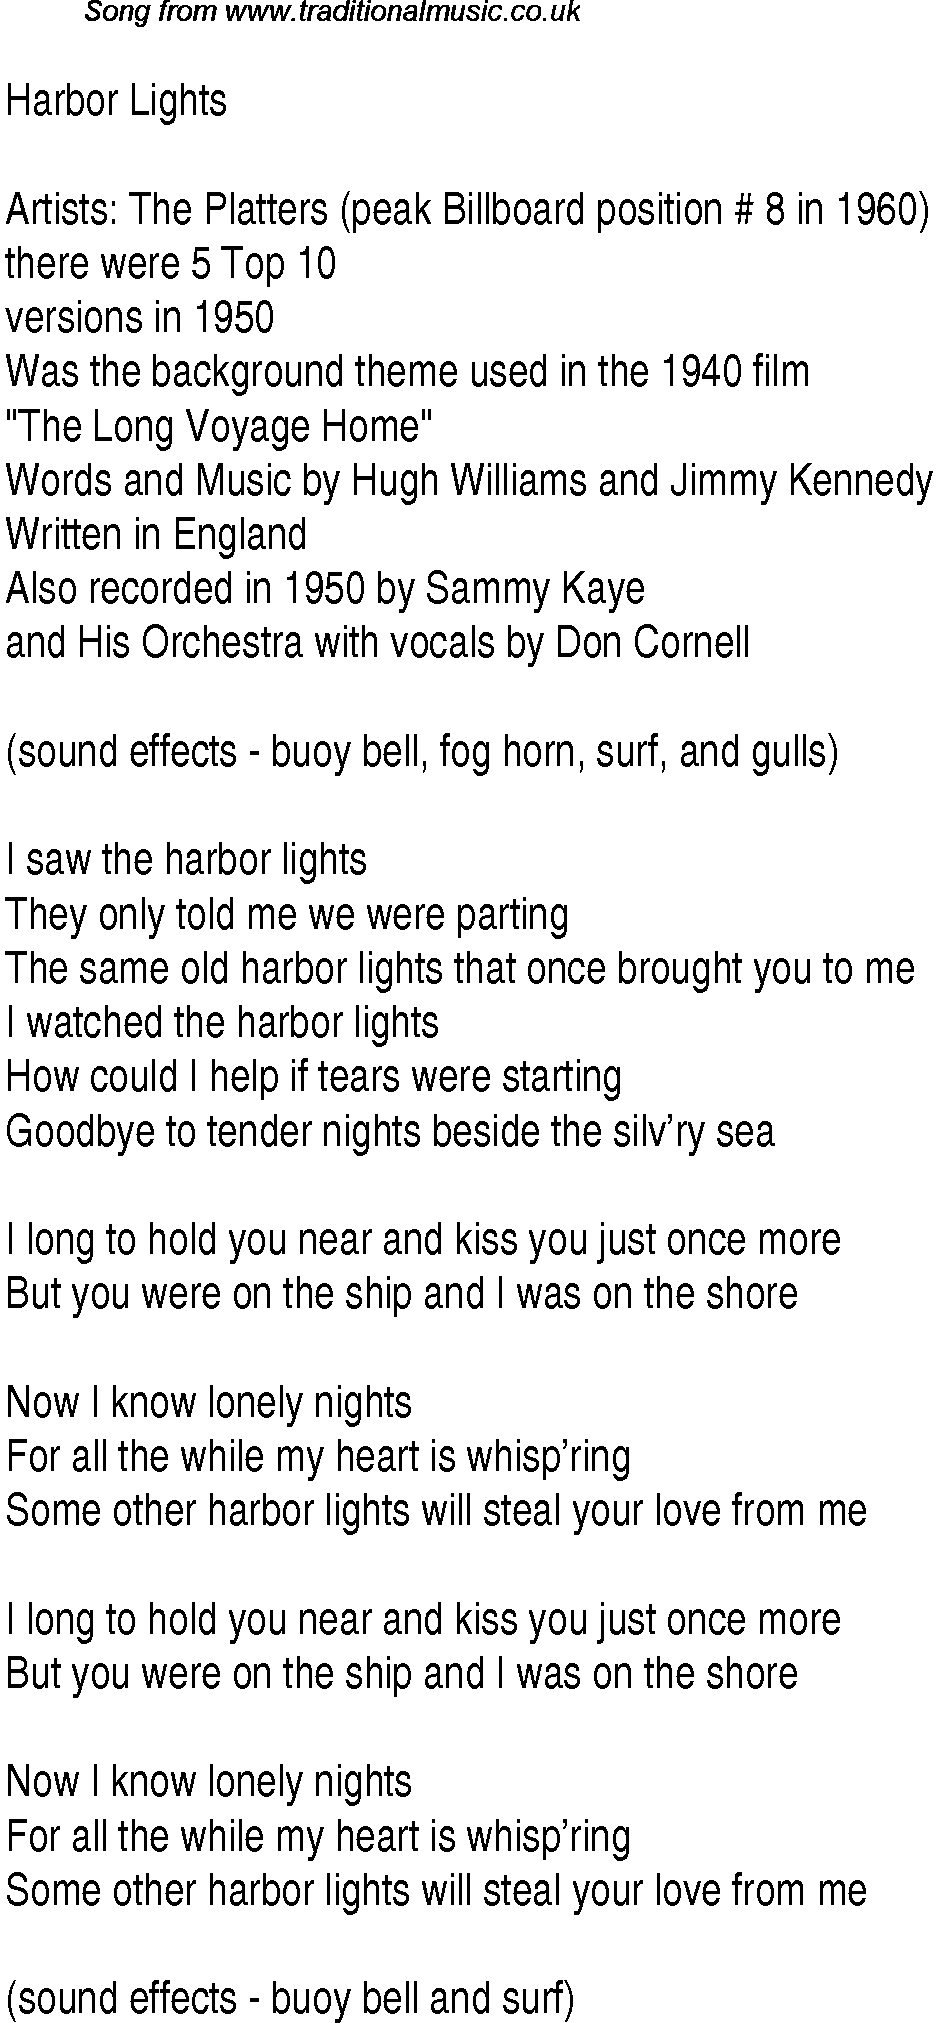 Music charts top songs 1948 - lyrics for Harbor Lights